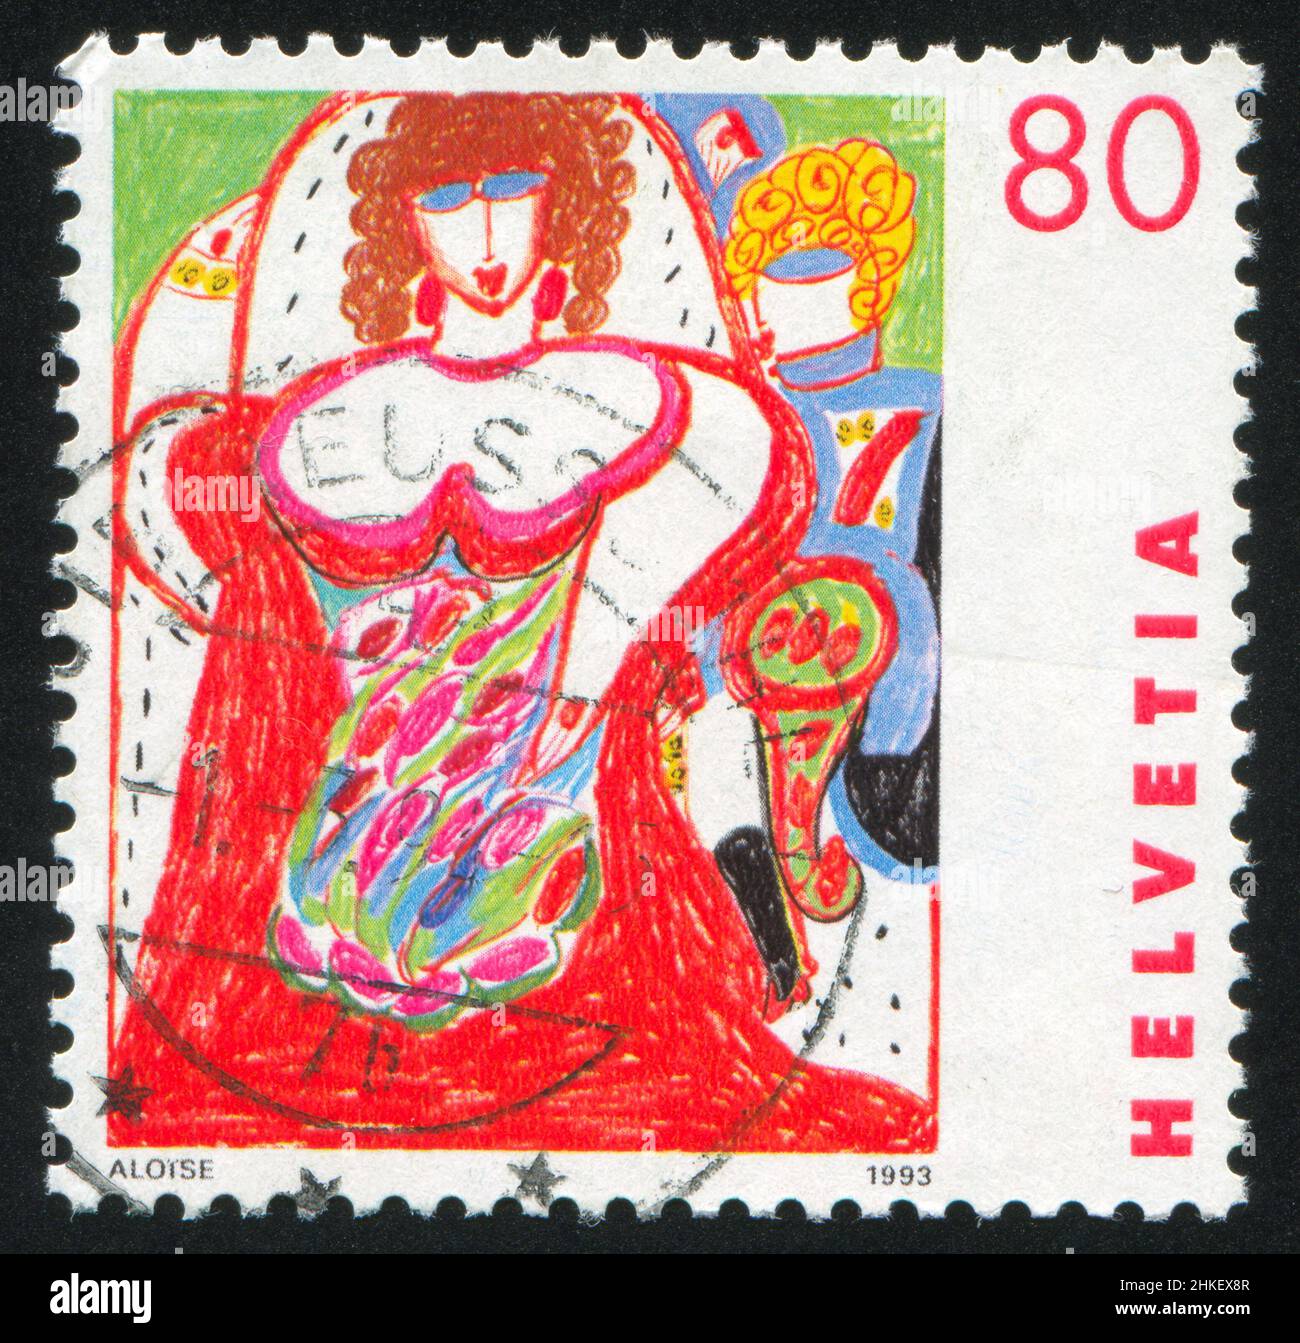 SWITZERLAND - CIRCA 1993: stamp printed by Switzerland, shows Grande Cantatrice Lilas Goergens by Aloise Corbaz, circa 1993 Stock Photo